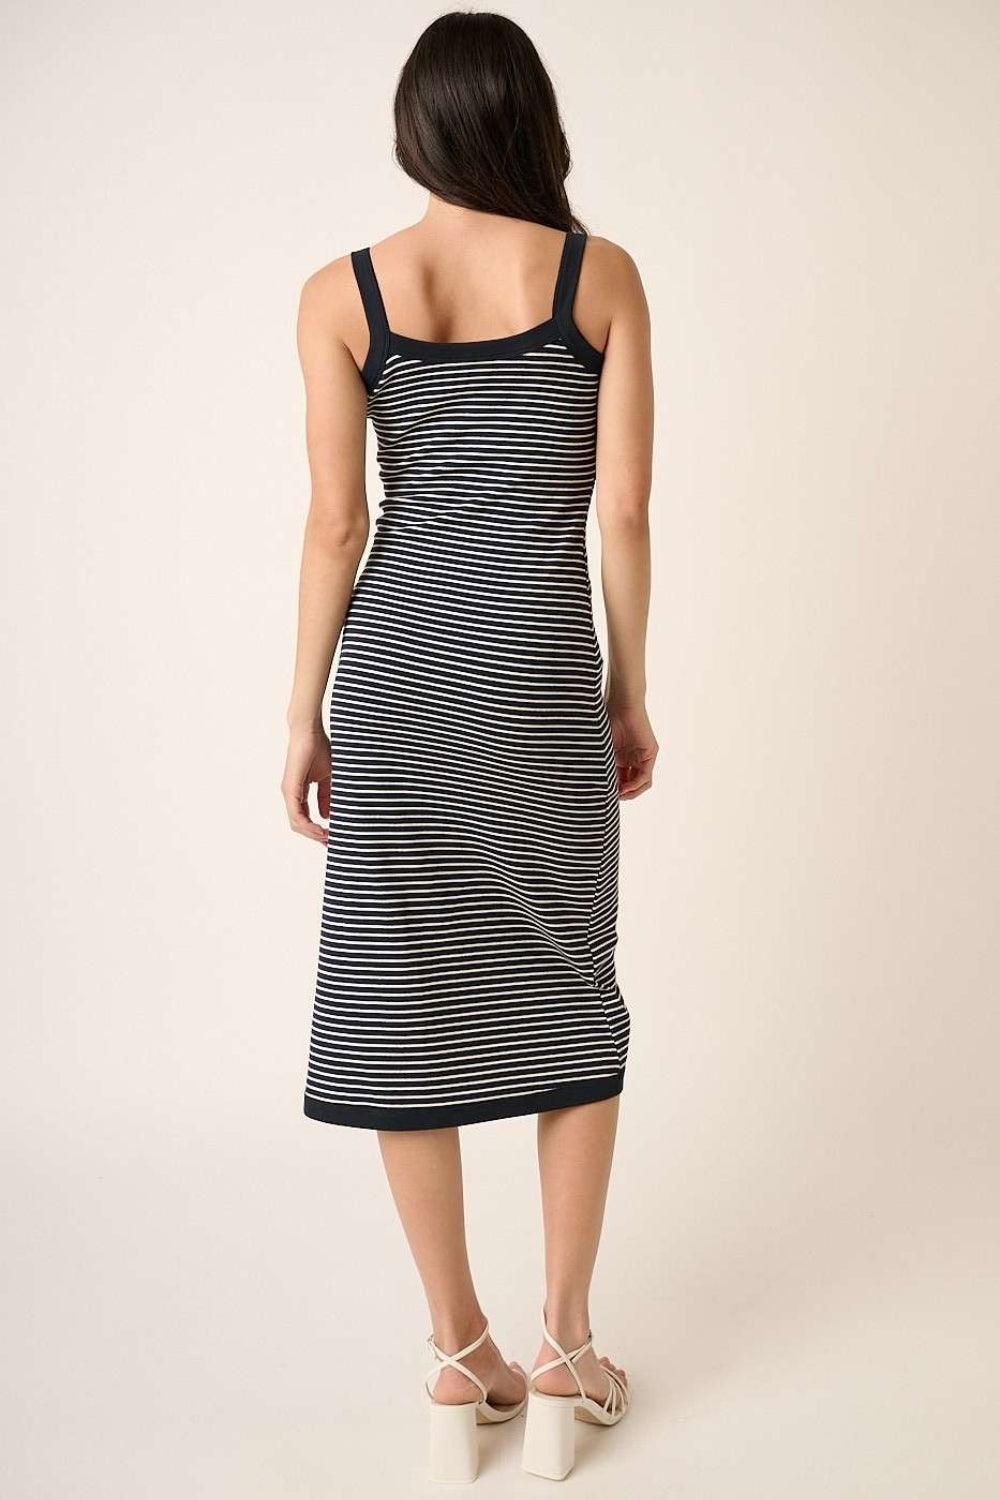 Mittoshop Contrast Striped Midi Cami Dress - AMIClubwear